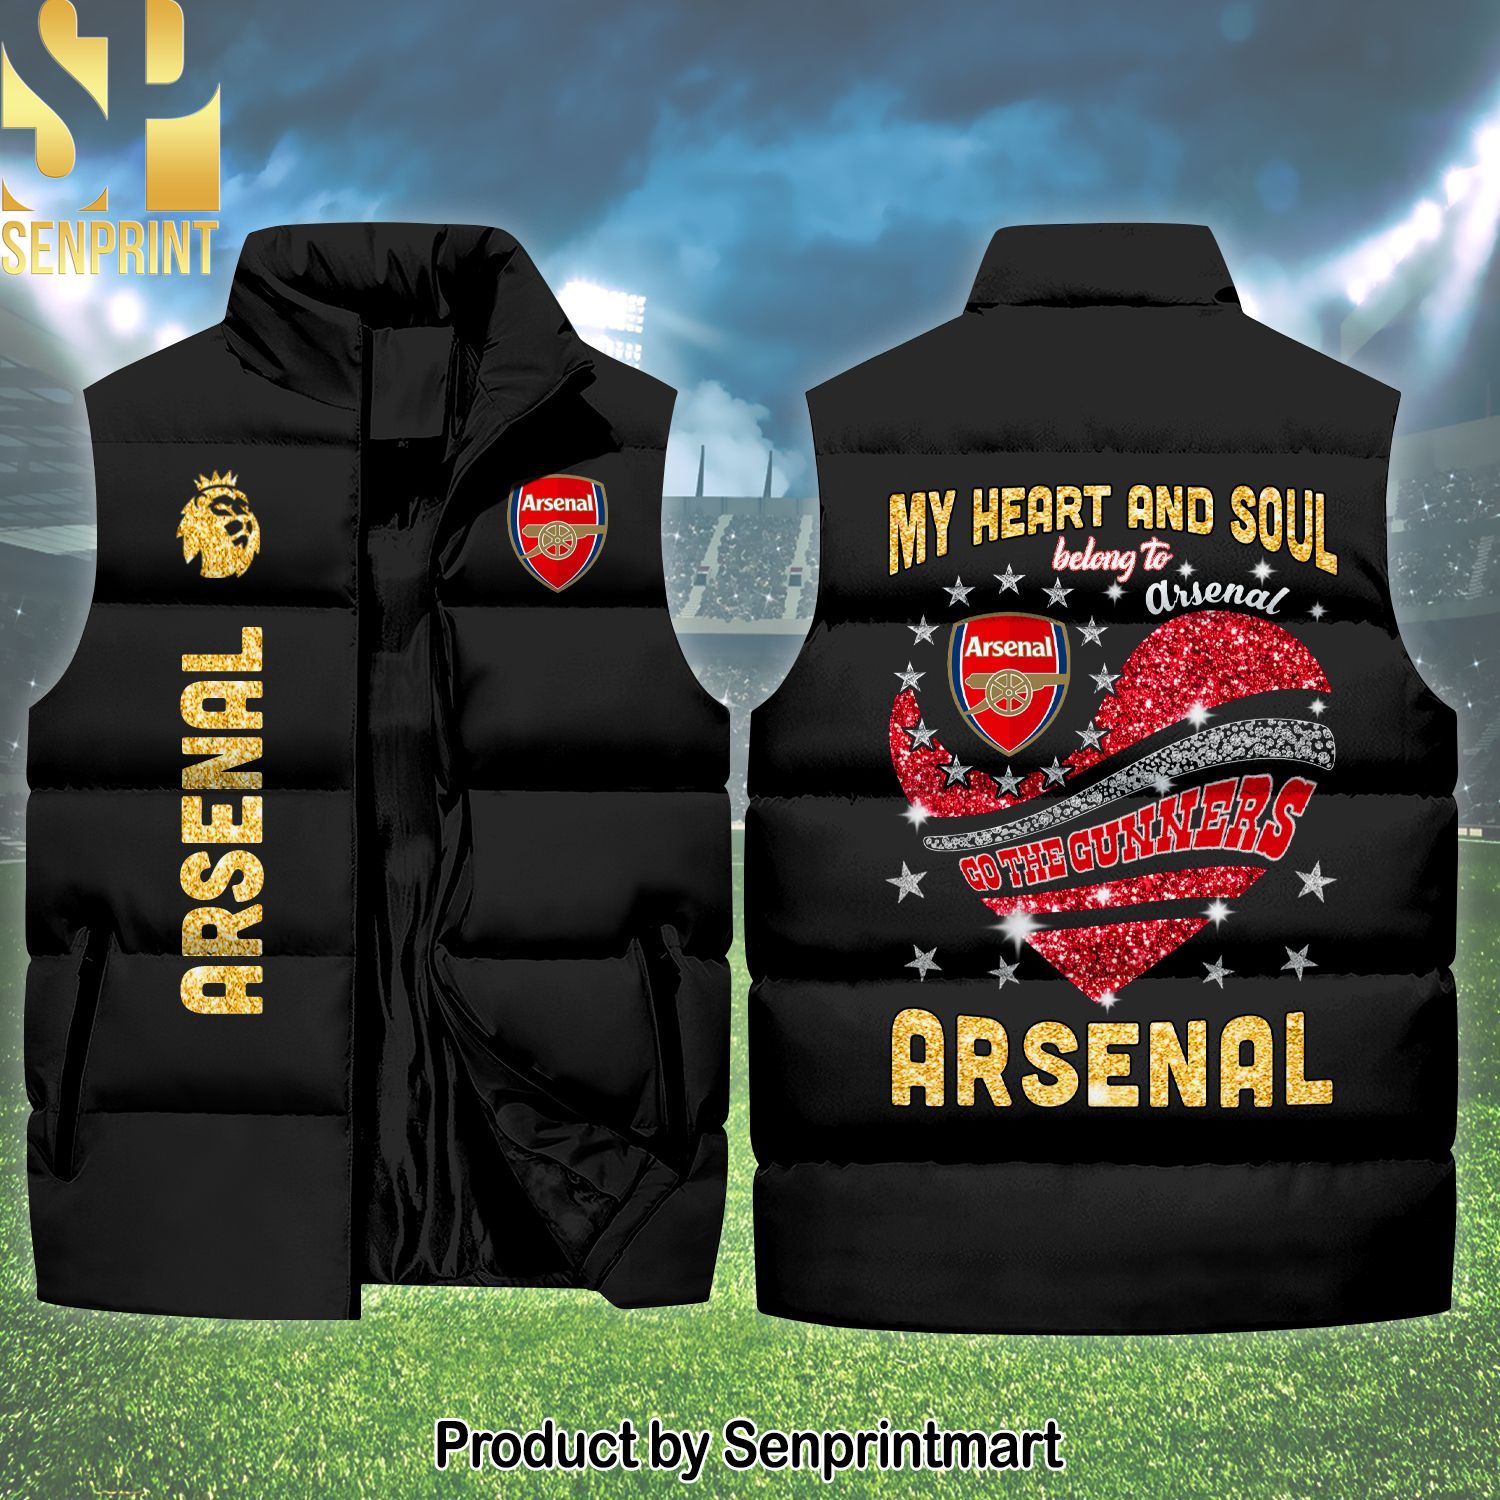 My Heart Belong To Arsenal Unisex Sleeveless Jacket